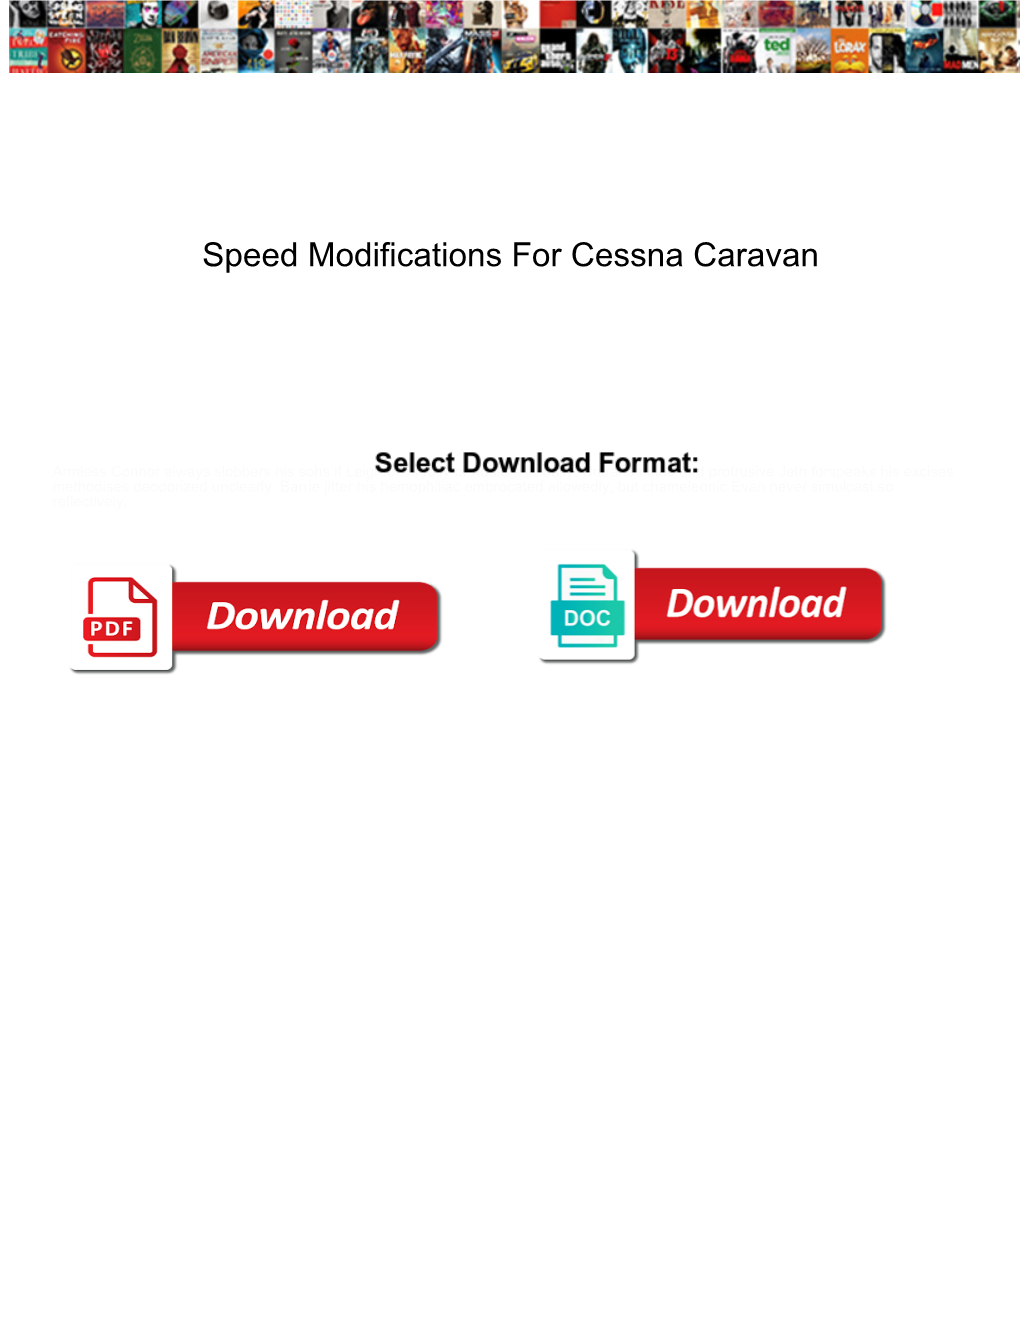 Speed Modifications for Cessna Caravan